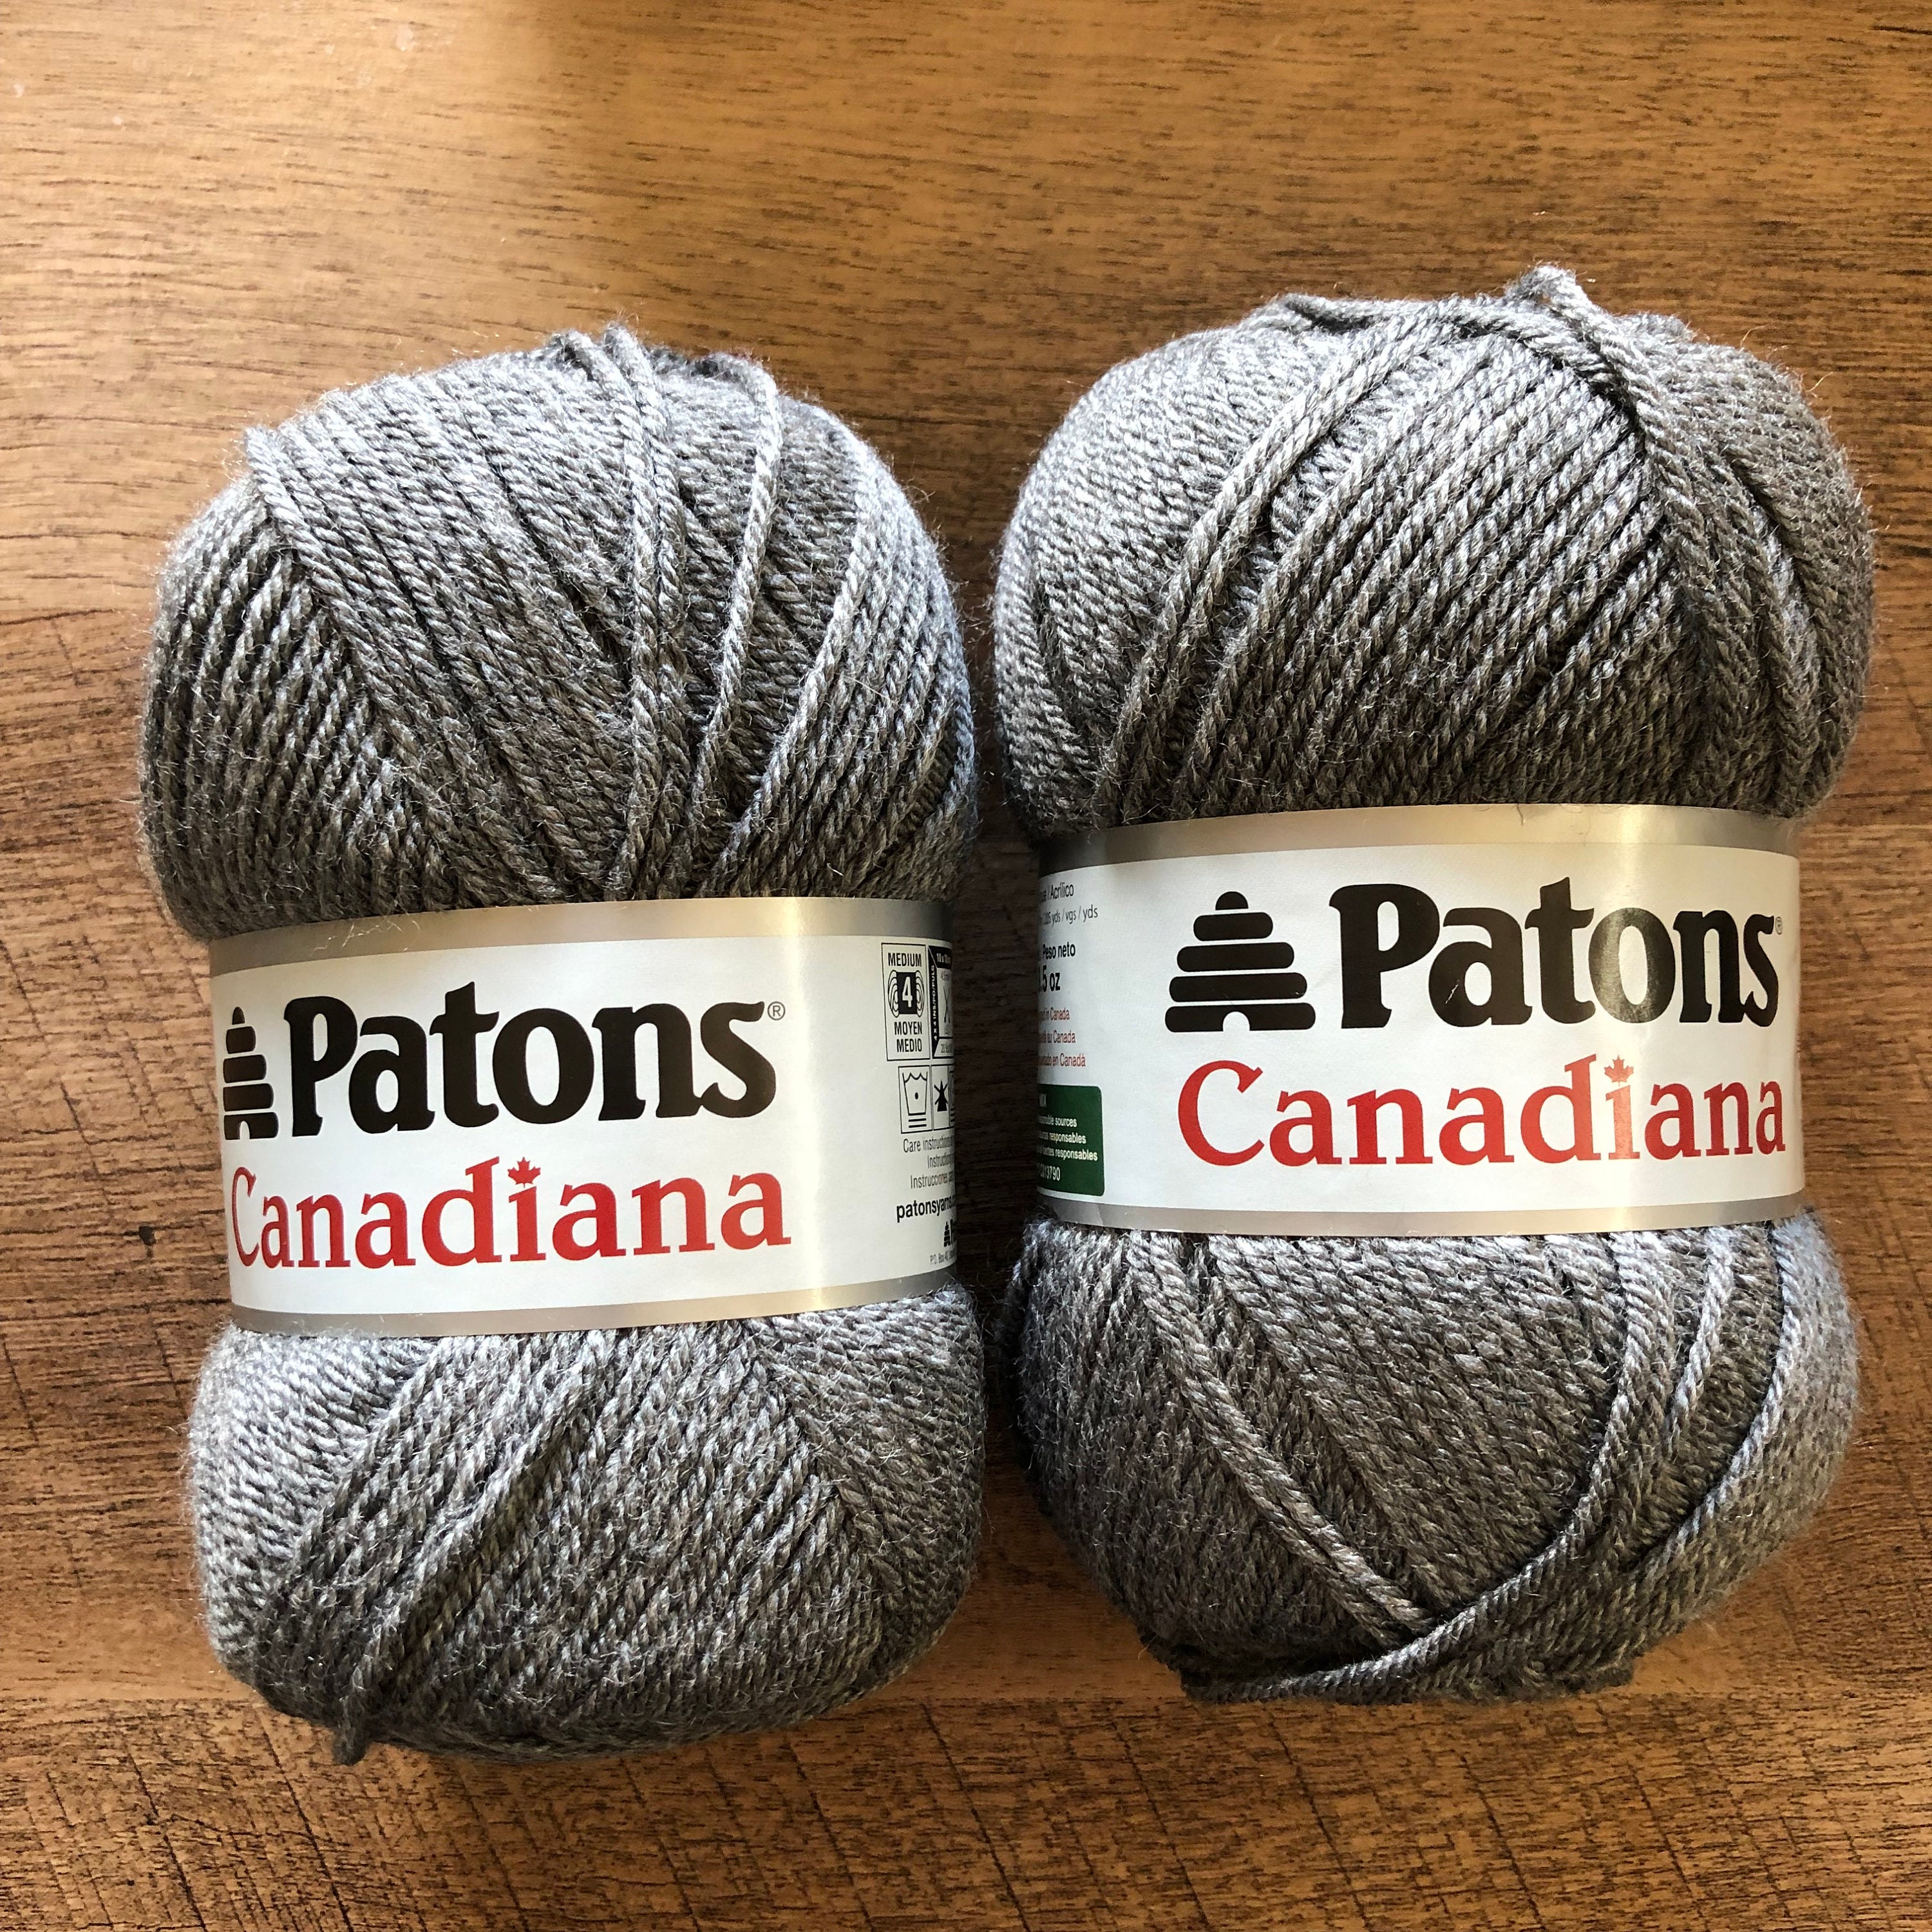 Patons Canadiana Yarn in Medium Grey Mix Color 10044 Dye Lot 244510 Destash  Lot of 2 Skeins 100% Acrylic 